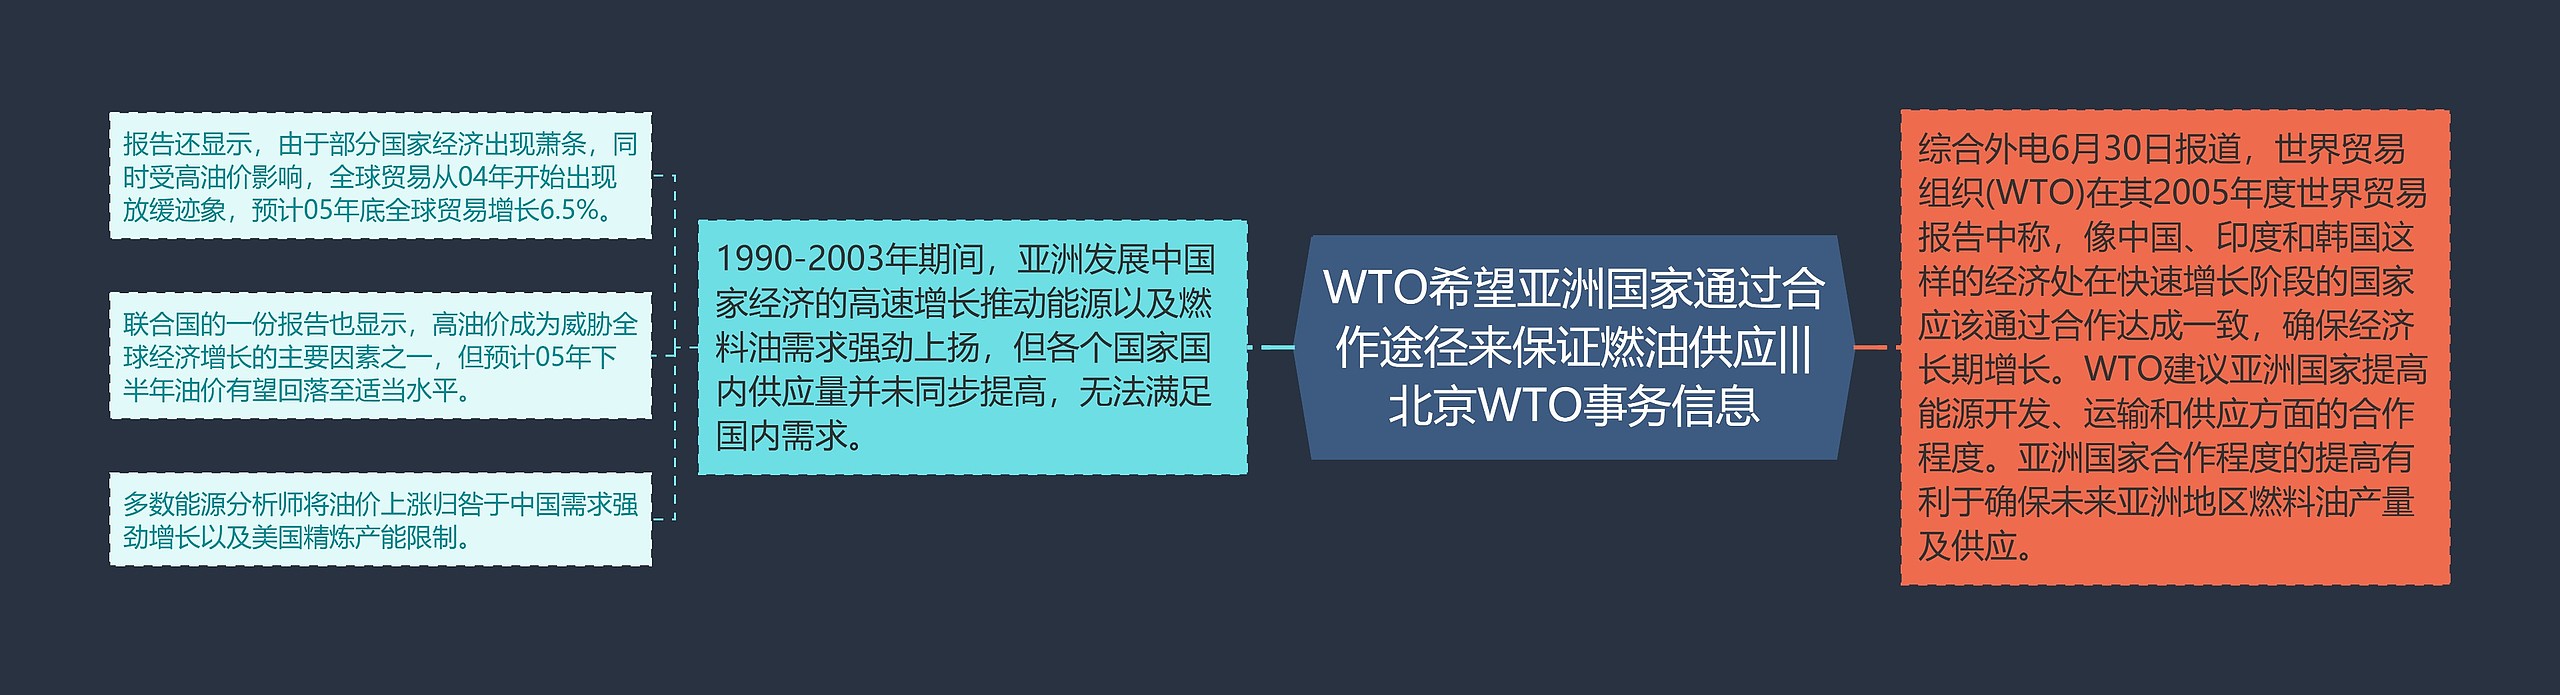 WTO希望亚洲国家通过合作途径来保证燃油供应|||北京WTO事务信息